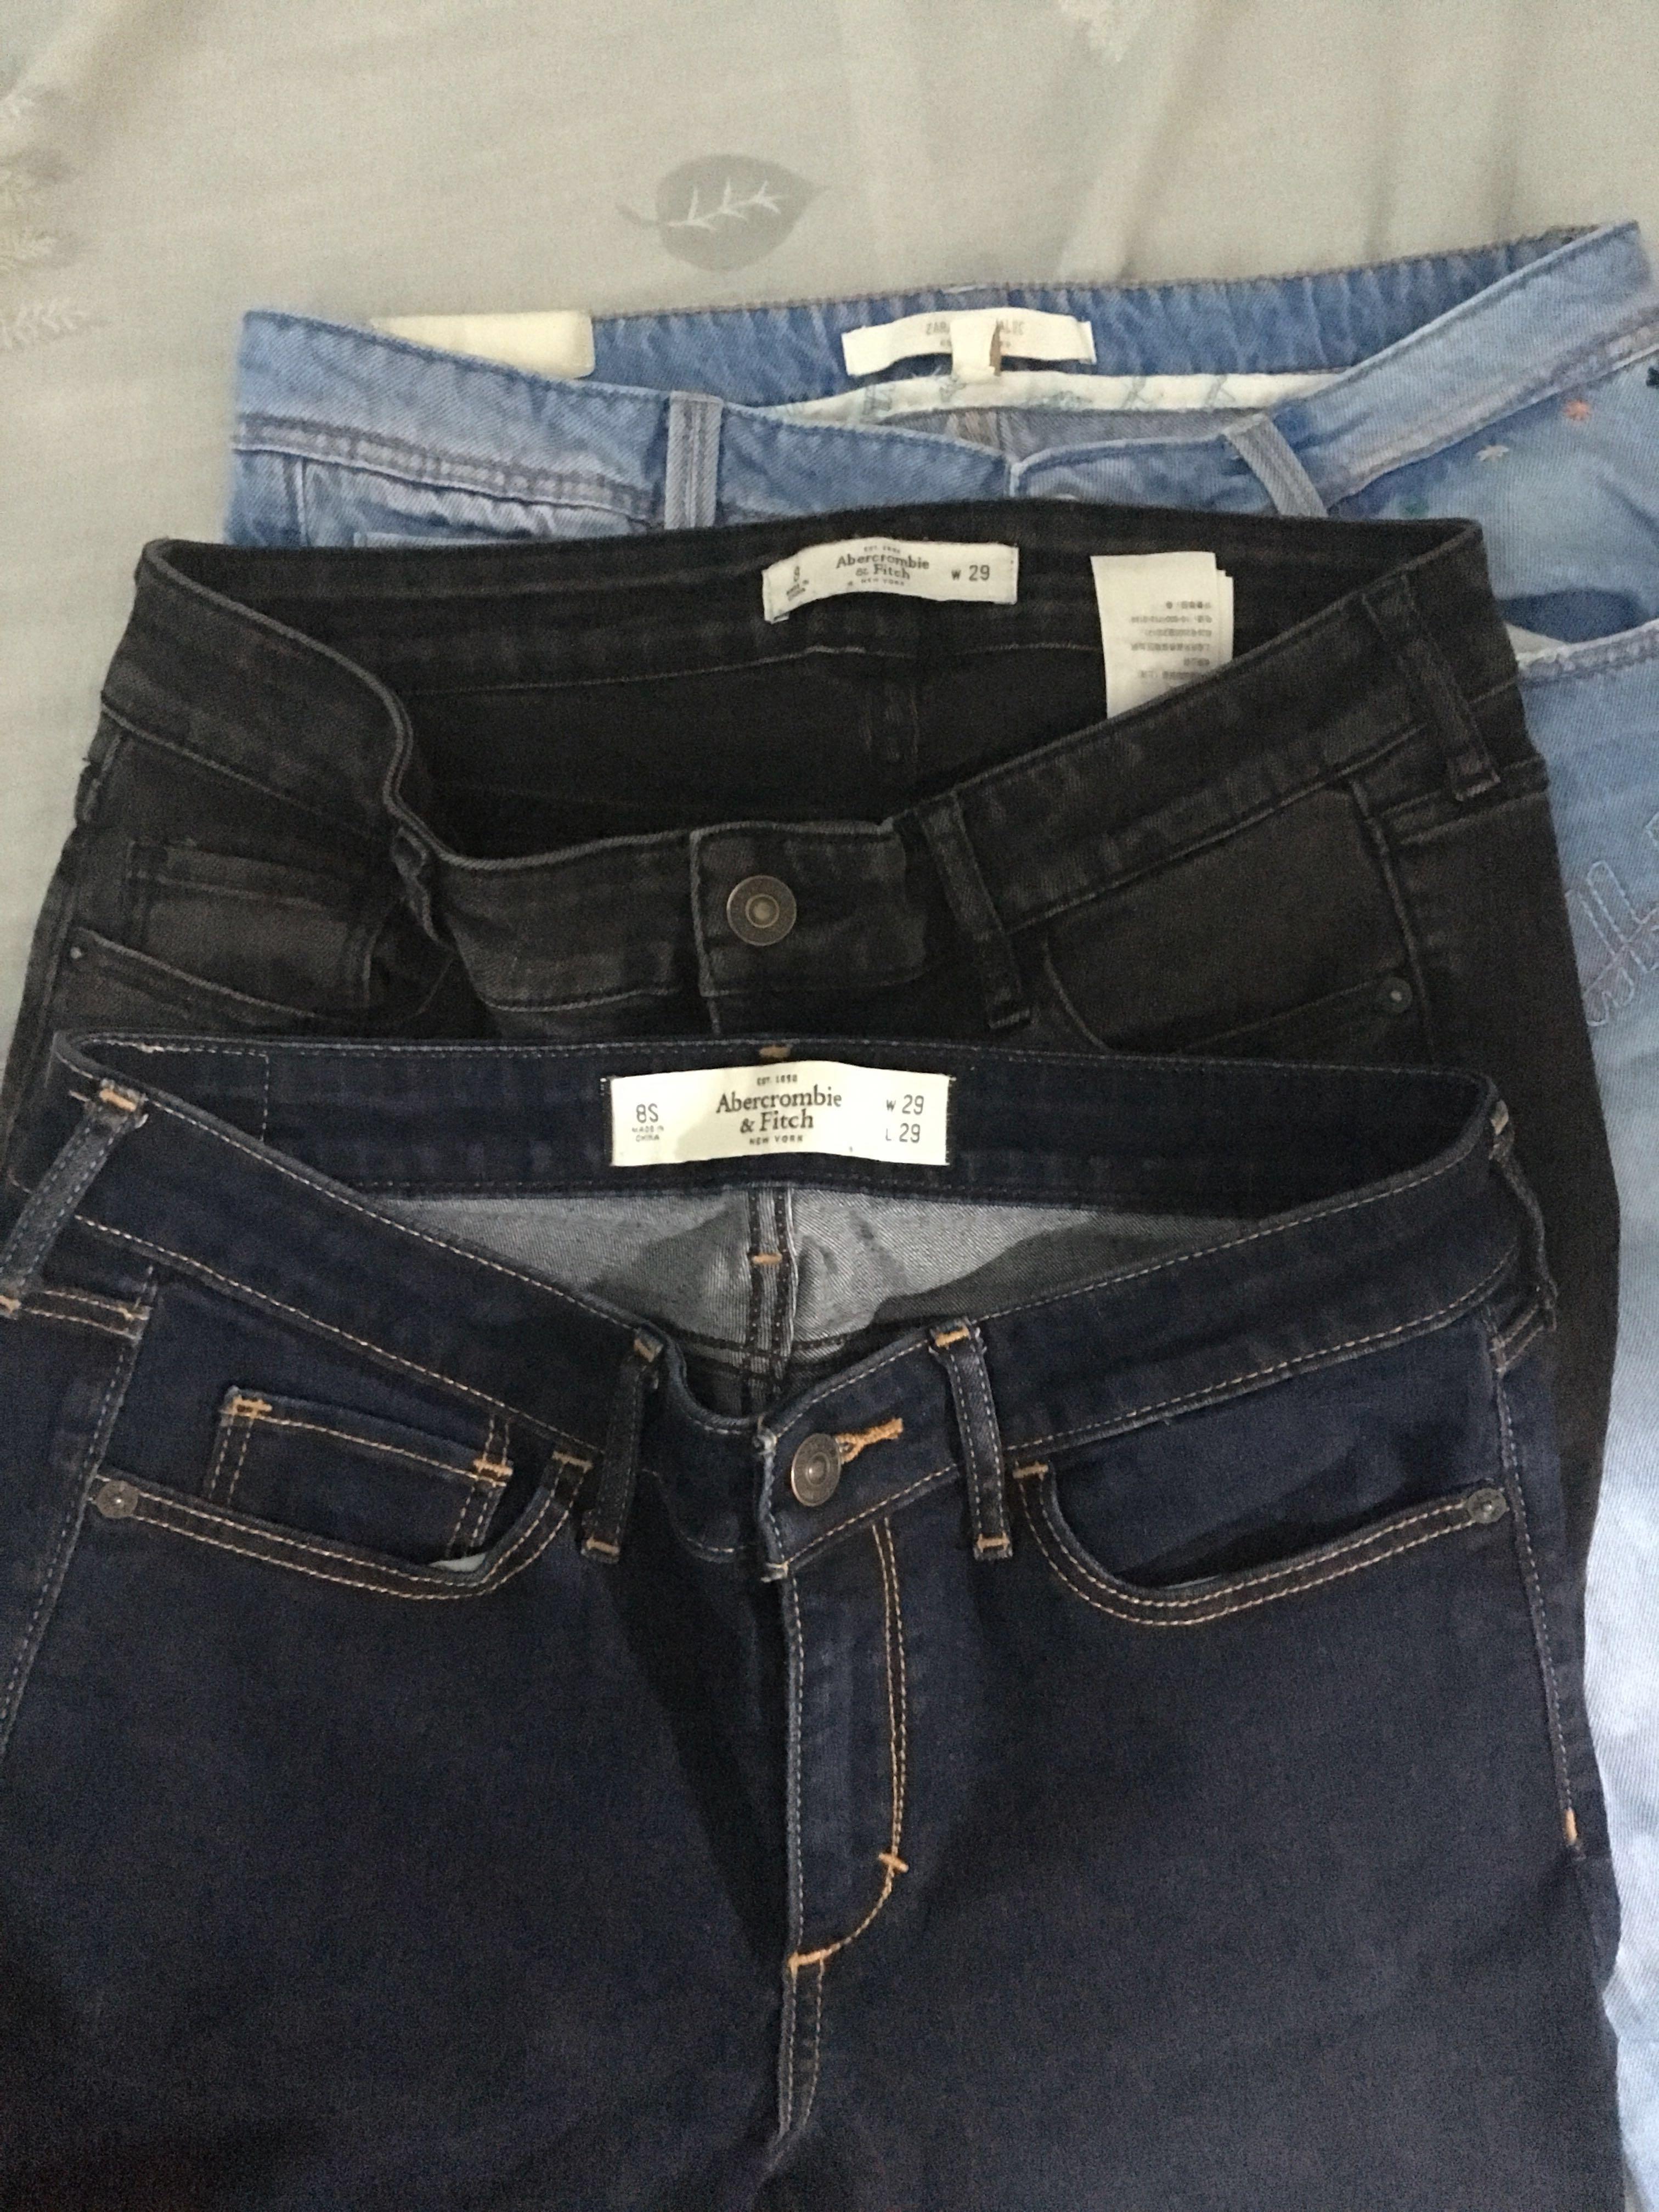 zara jeans for sale